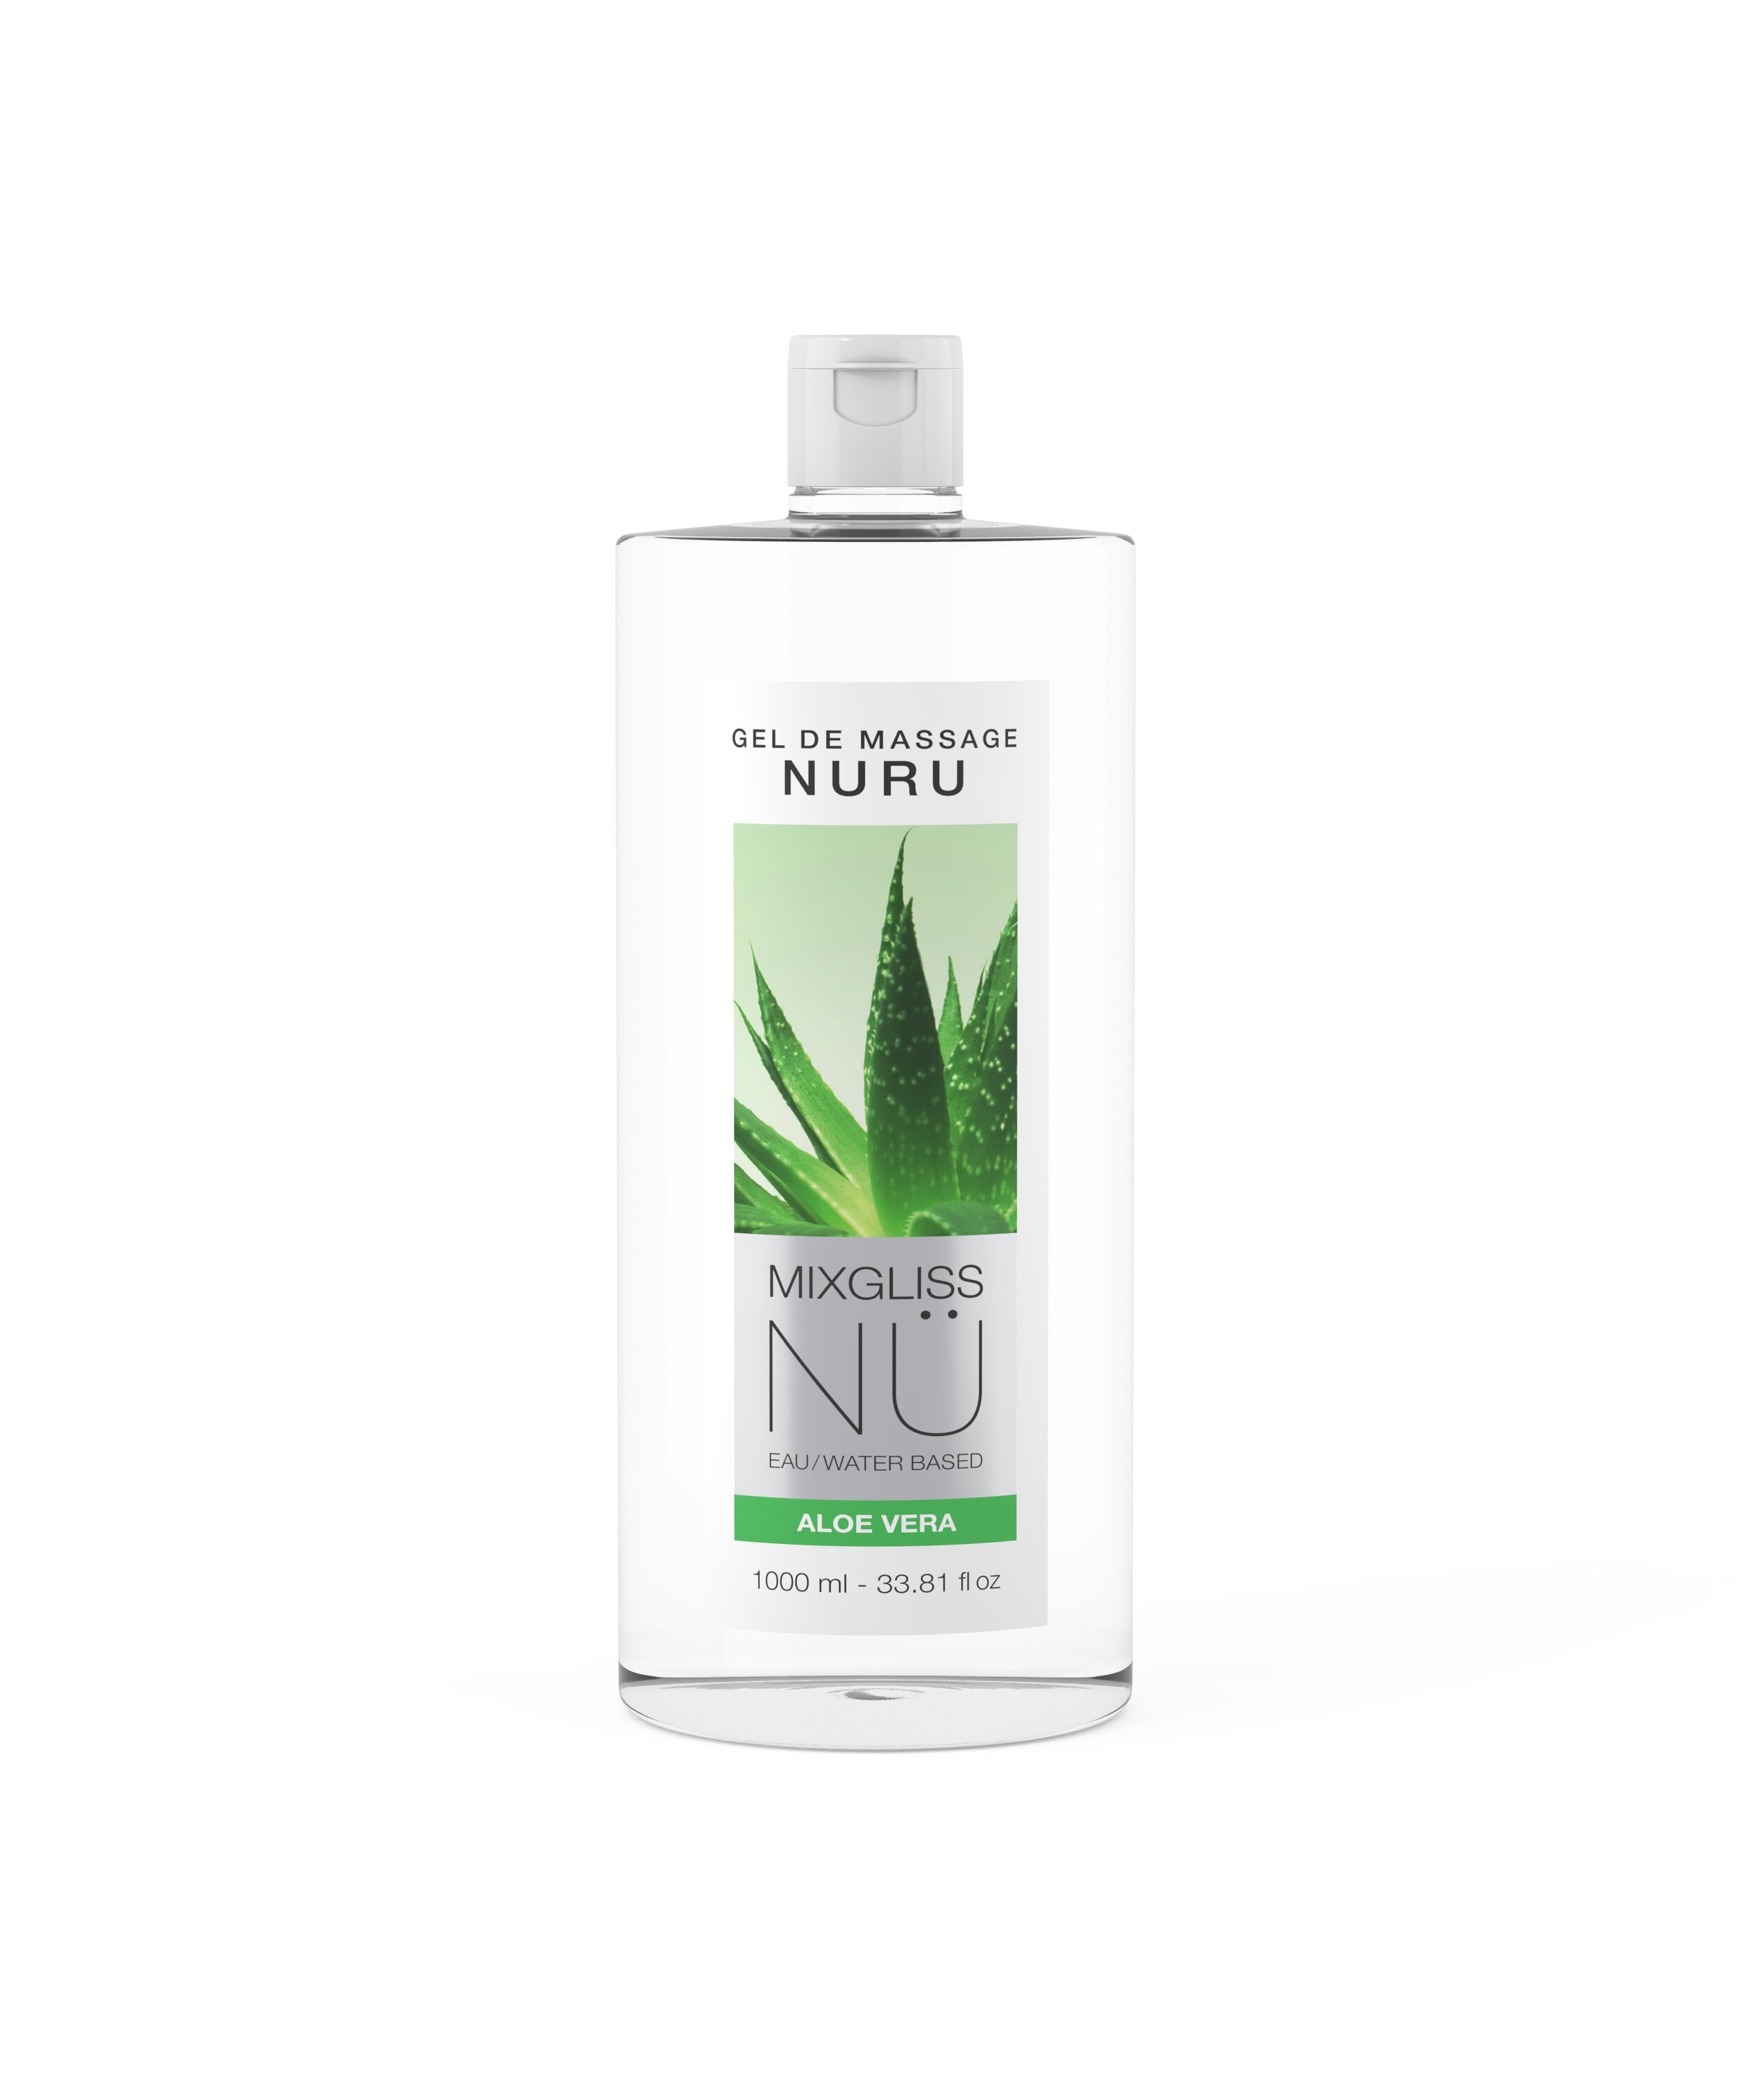 Nuru Mixgliss NÜ Aloe Vera by Strap-on-Me (online store)